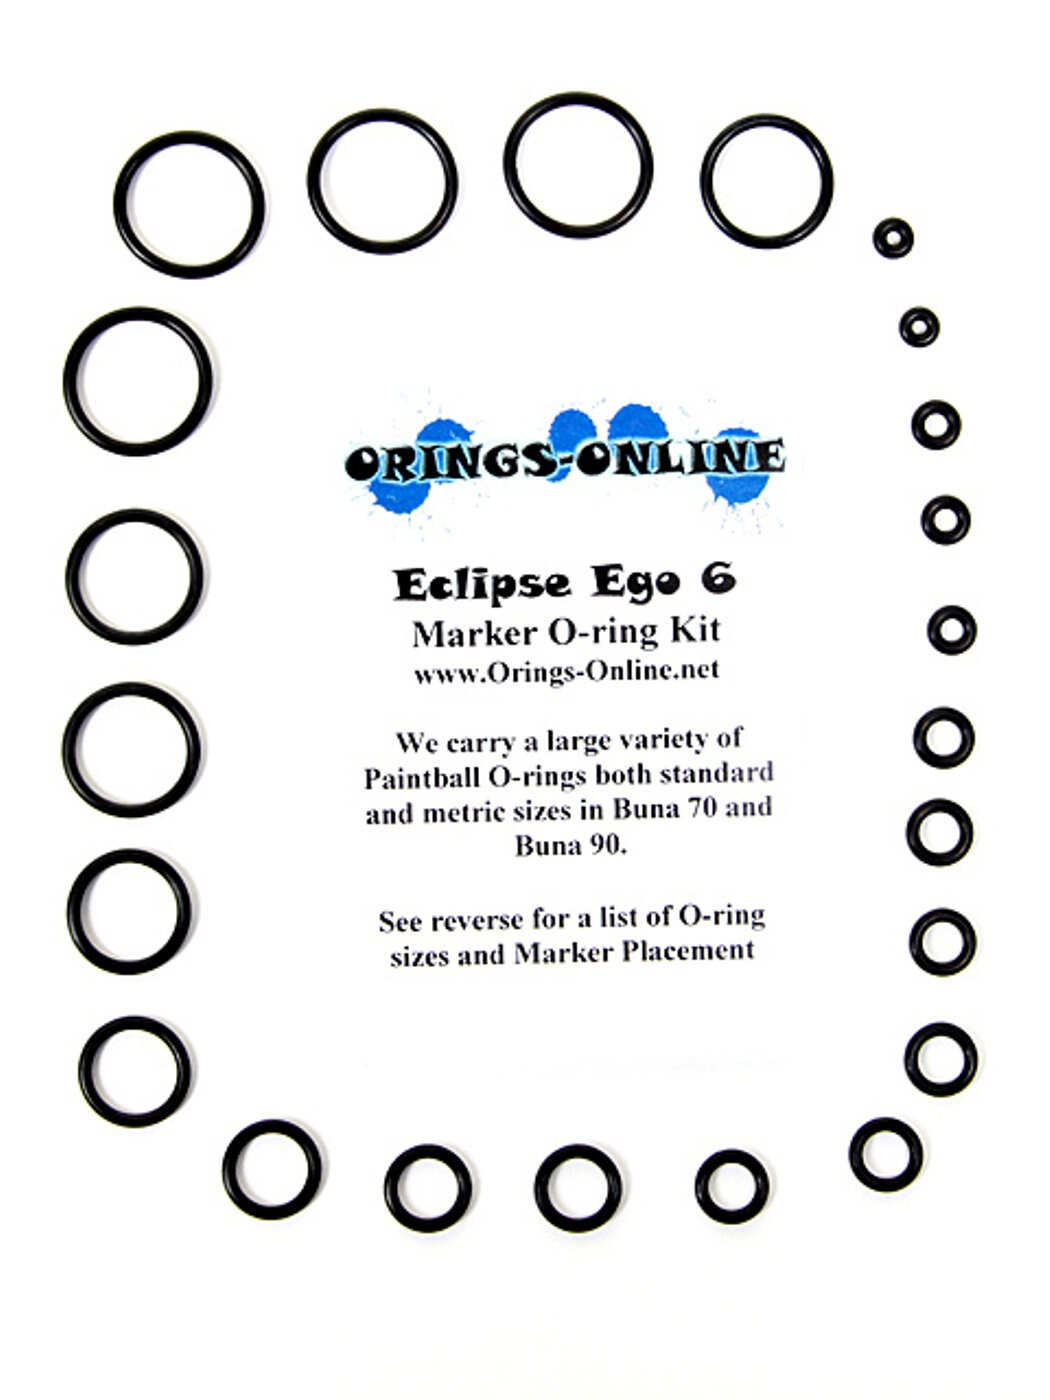 Planet Eclipse Ego 6 Marker O-ring Kit